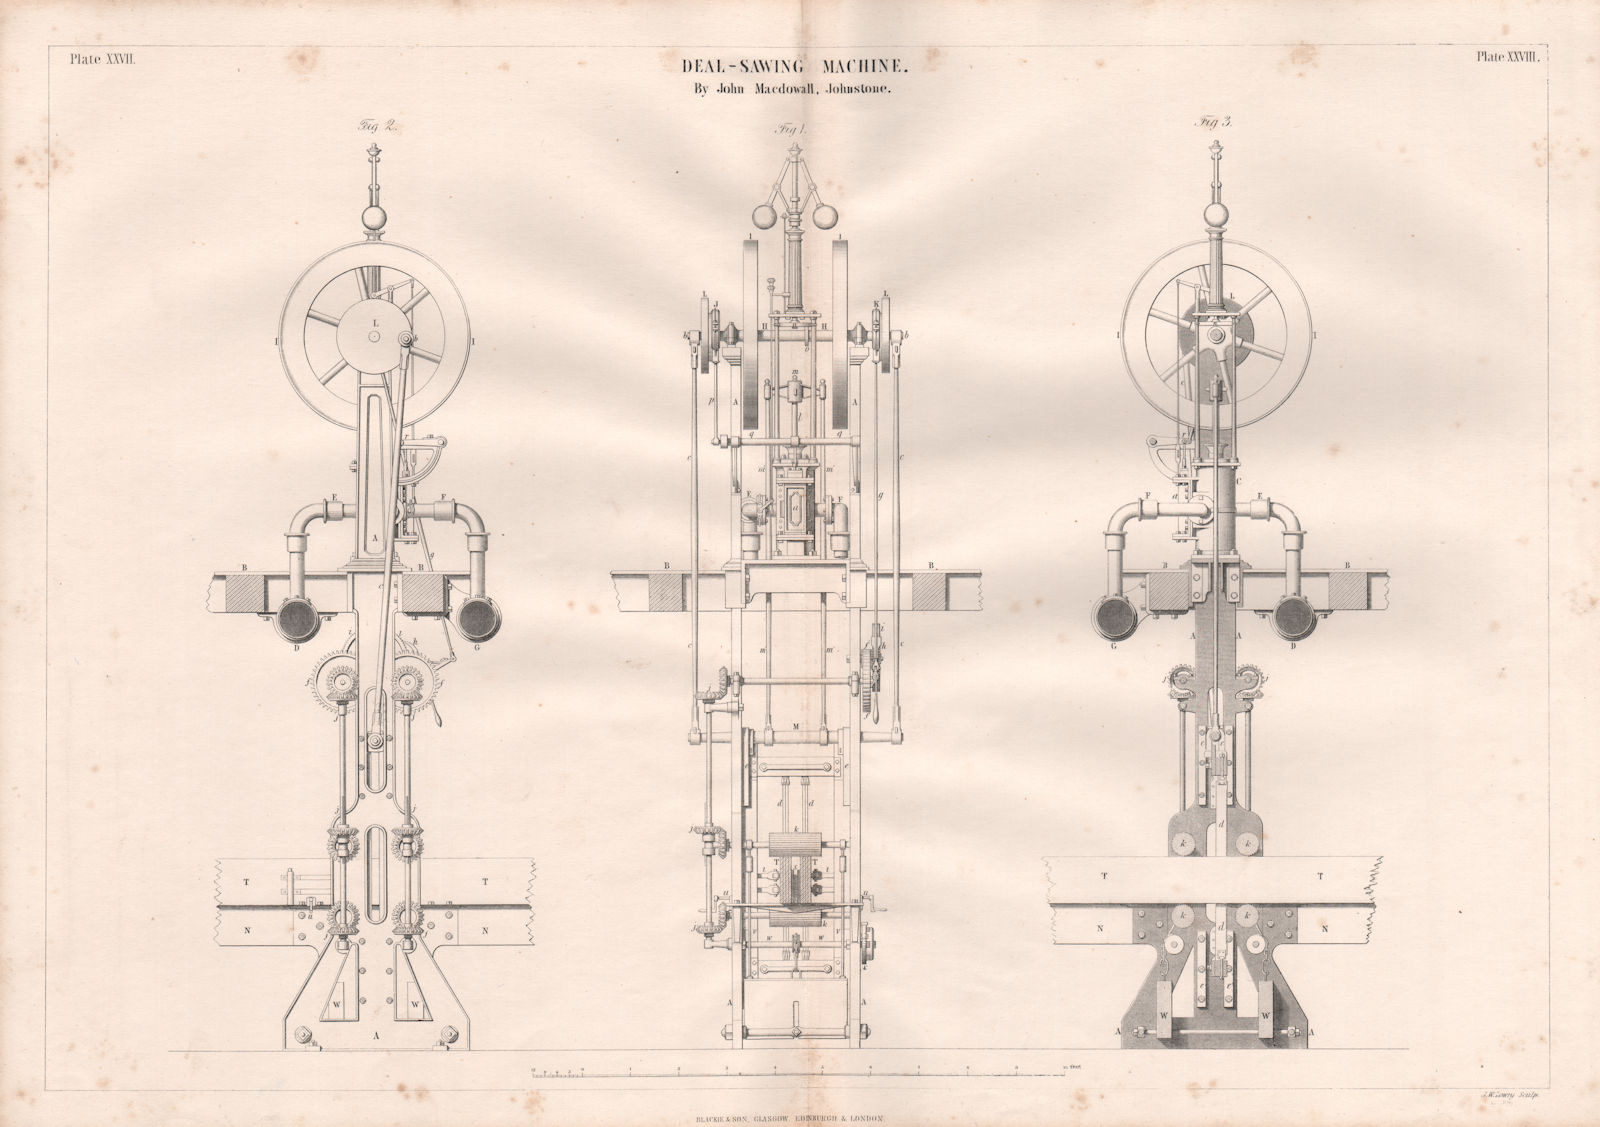 VICTORIAN ENGINEERING DRAWING Deal-sawing machine. John Macdowall Johnstone 1847